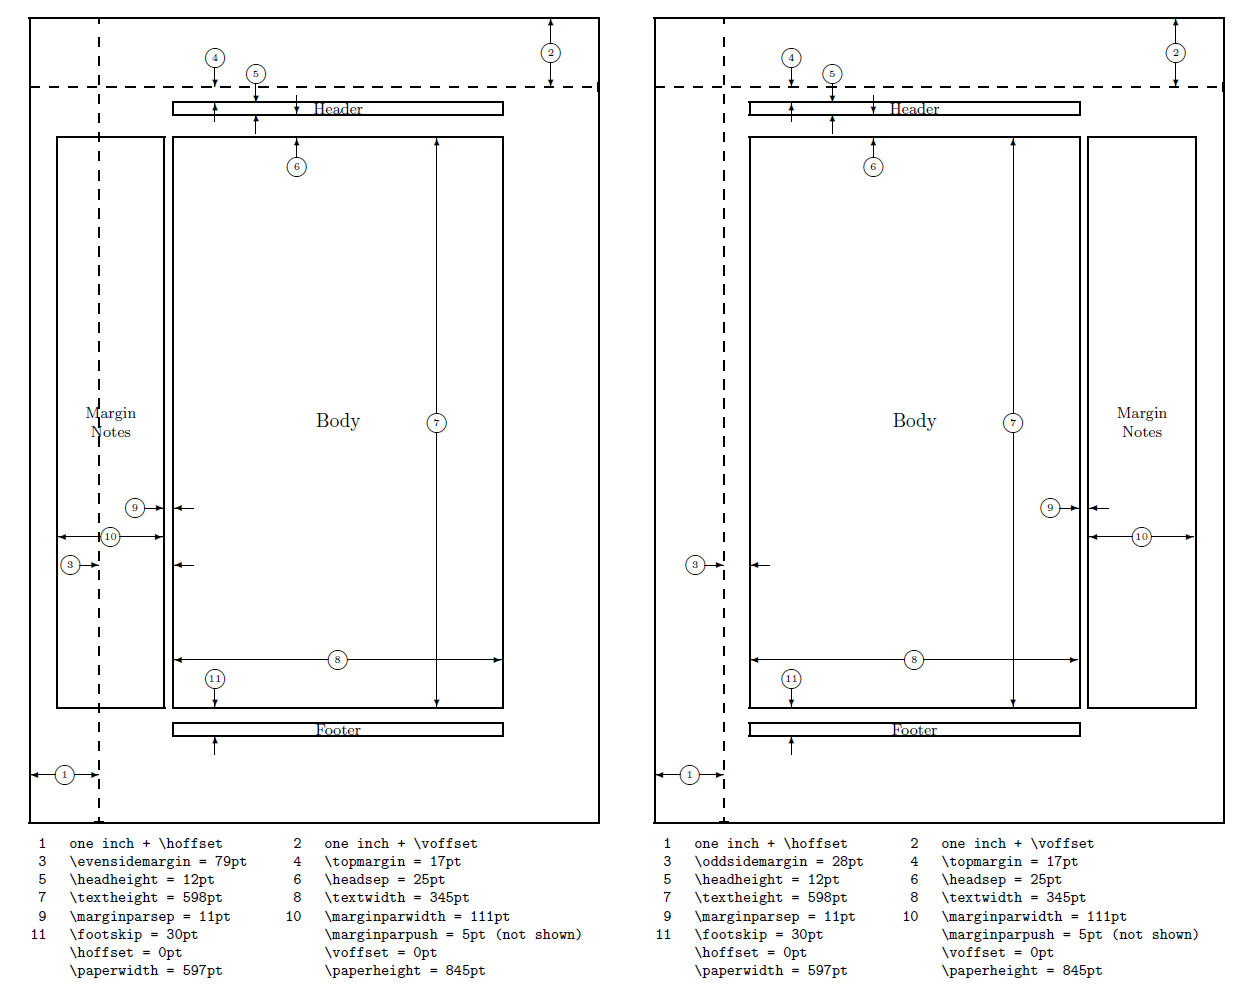 Image showing latex document layout